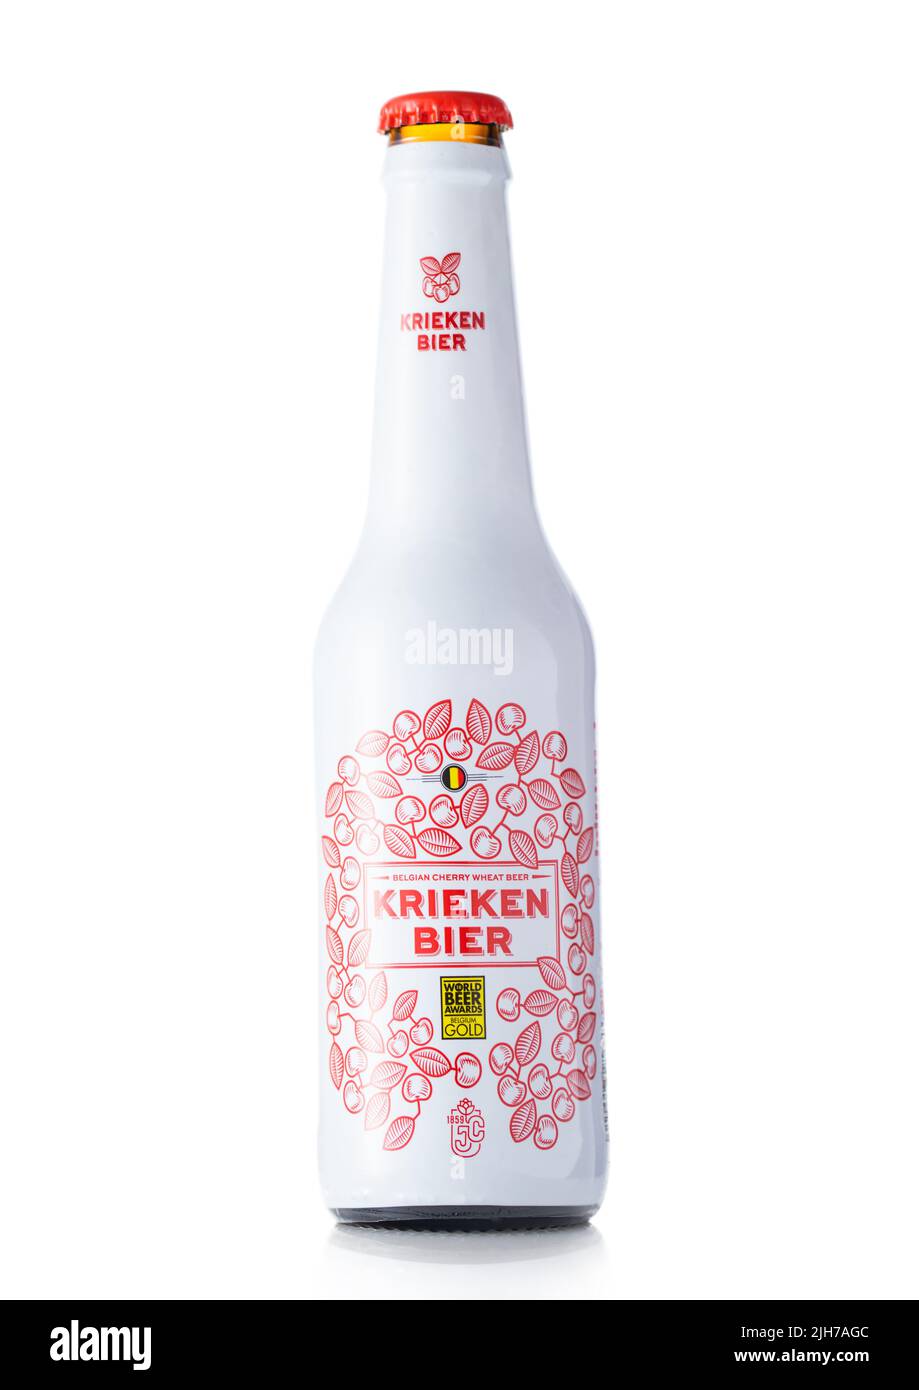 LONDON,UK - JUNE 30, 2022: Bottle of Krieken bier beer on white background. Stock Photo